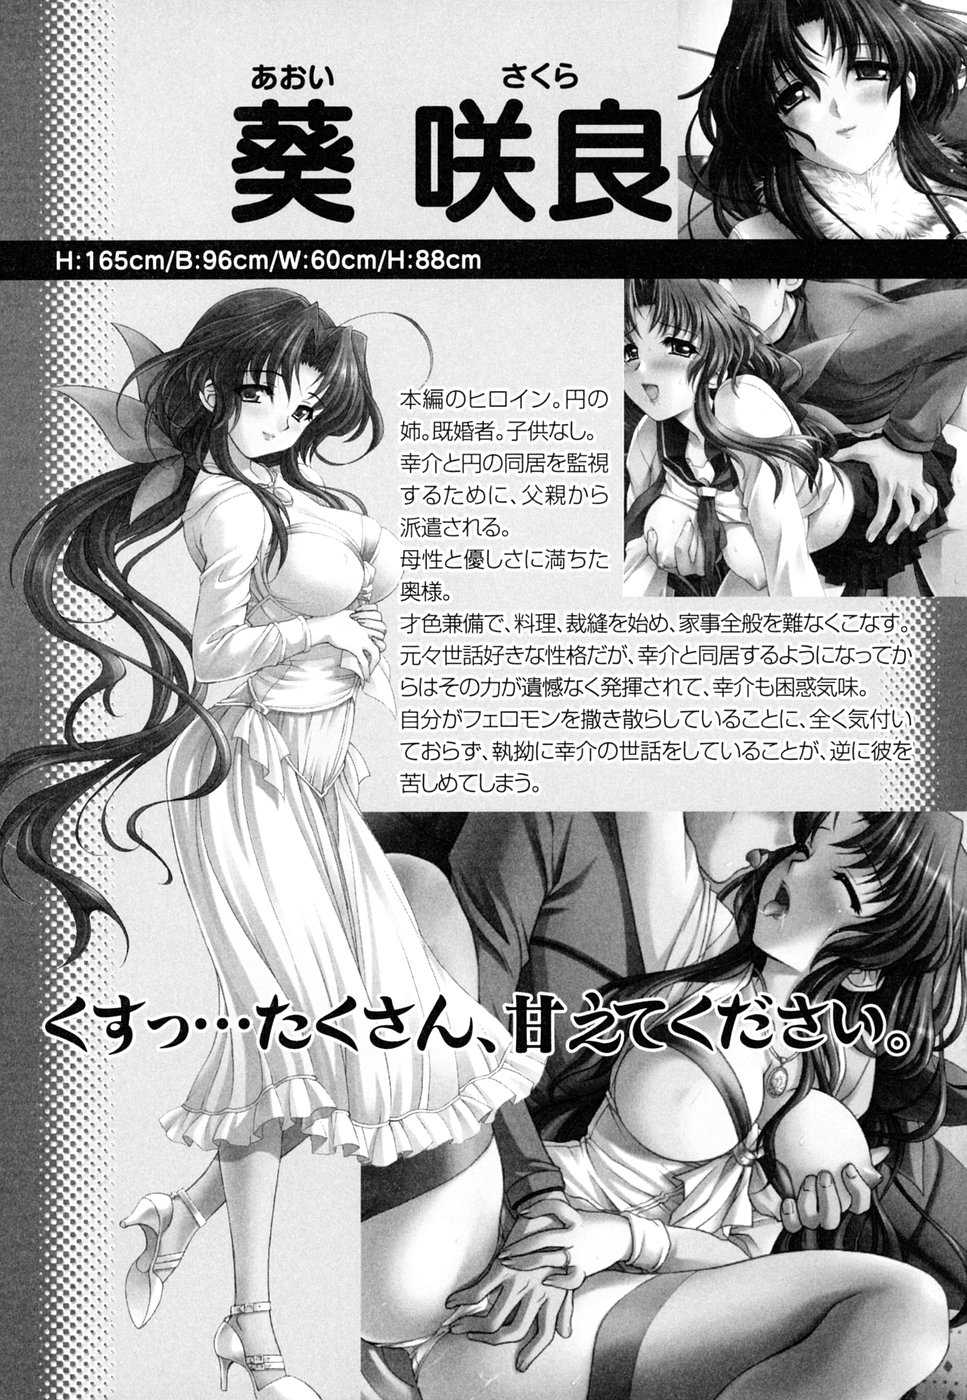 [XO Game Comics] Tsuma Shibori (Ch.1-3)(HMedia)eng 